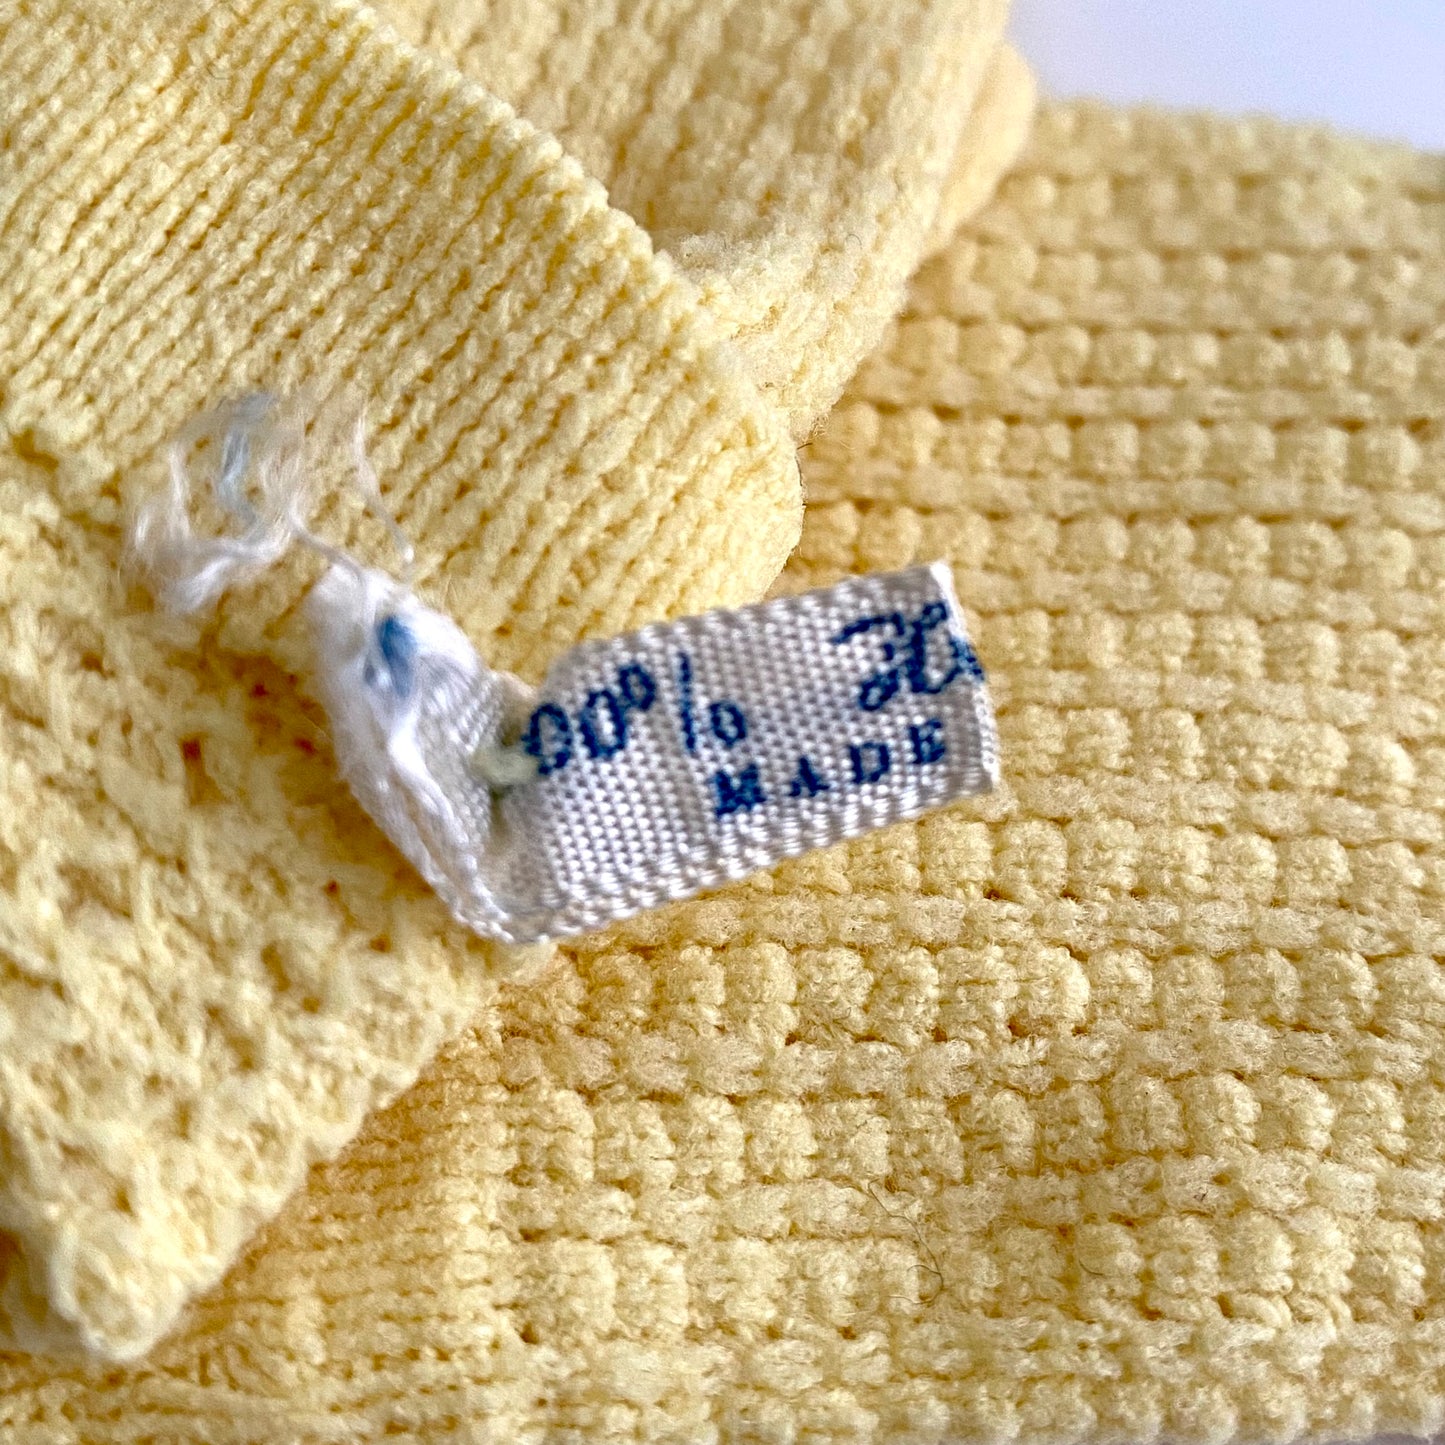 1950s Helanea Yellow Knit Stretch Gloves